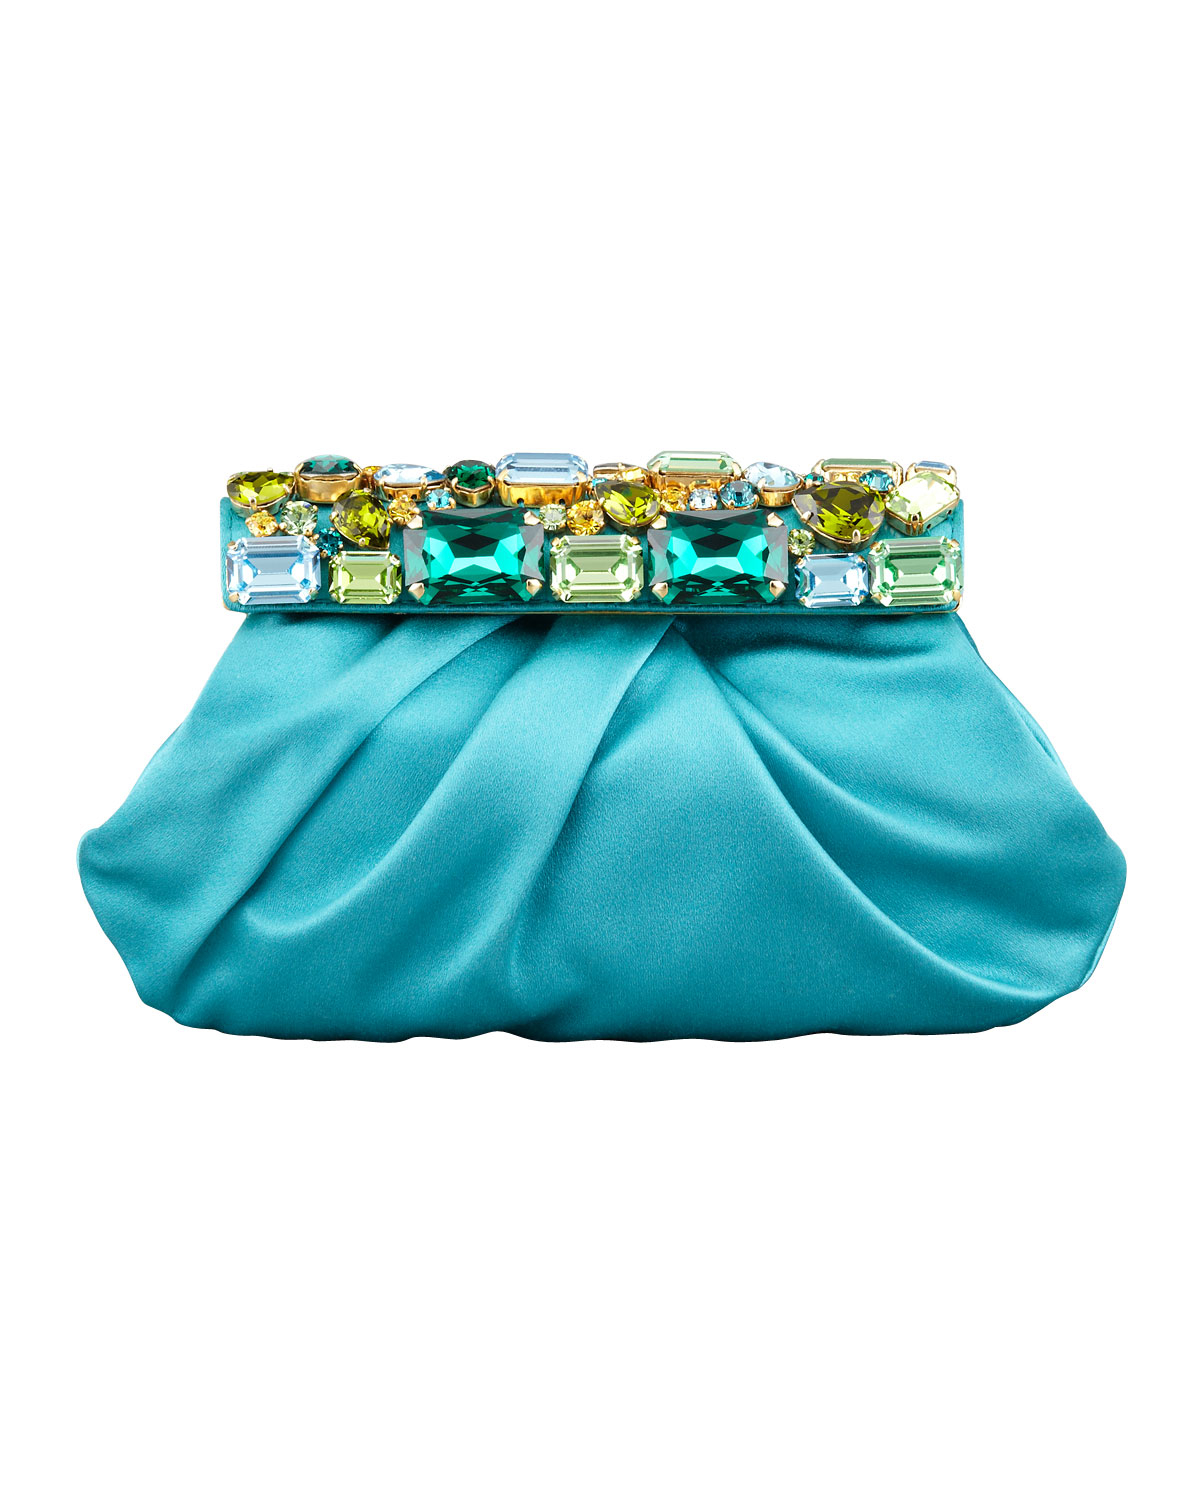 parda bag - Prada Raso Jeweled Satin Clutch Bag in Blue (pavone) | Lyst